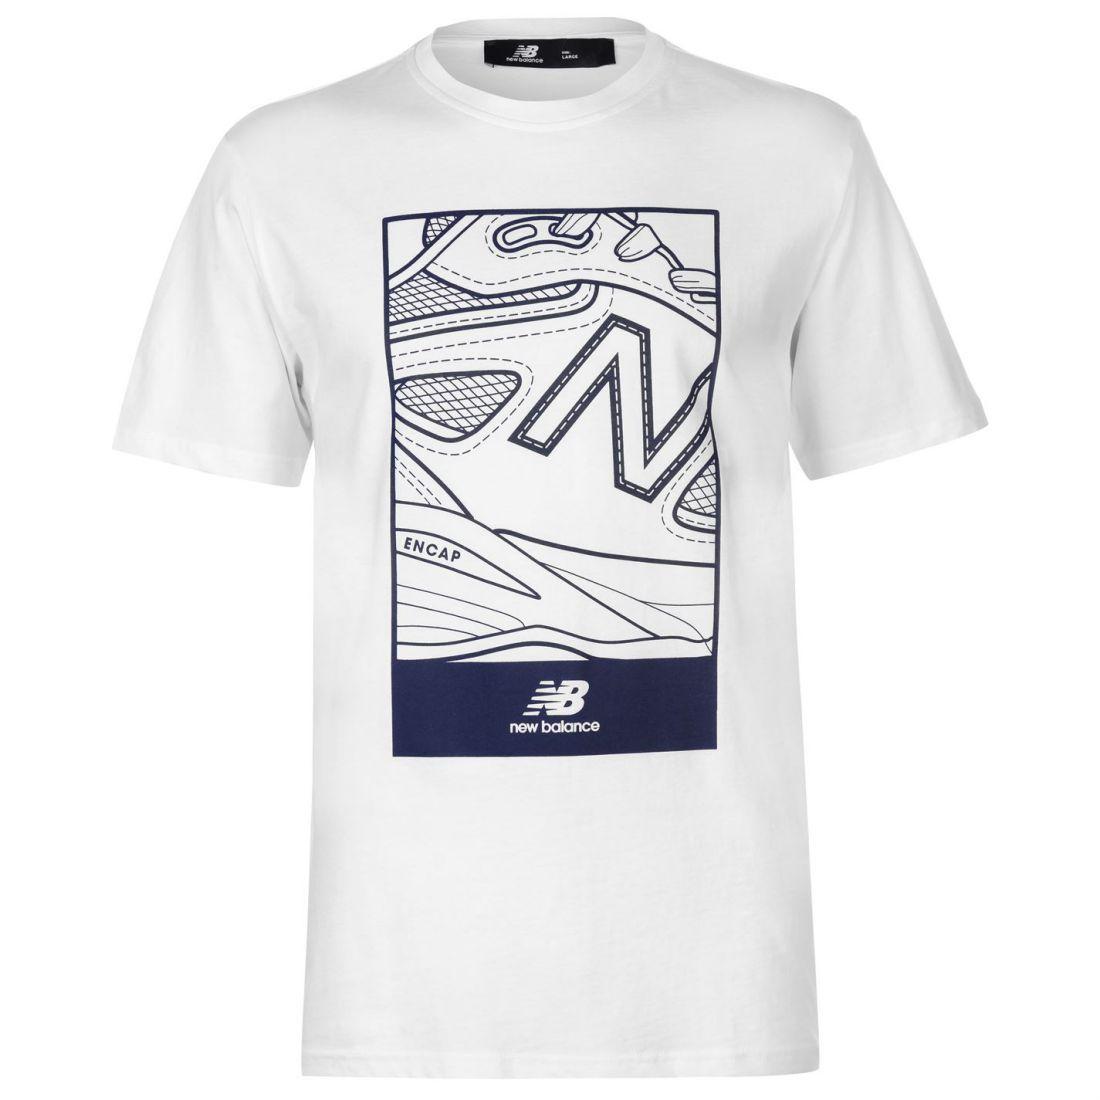 Shoe Logo - New Balance Mens Shoe Logo T Shirt Crew Neck Tee Top Short Sleeve